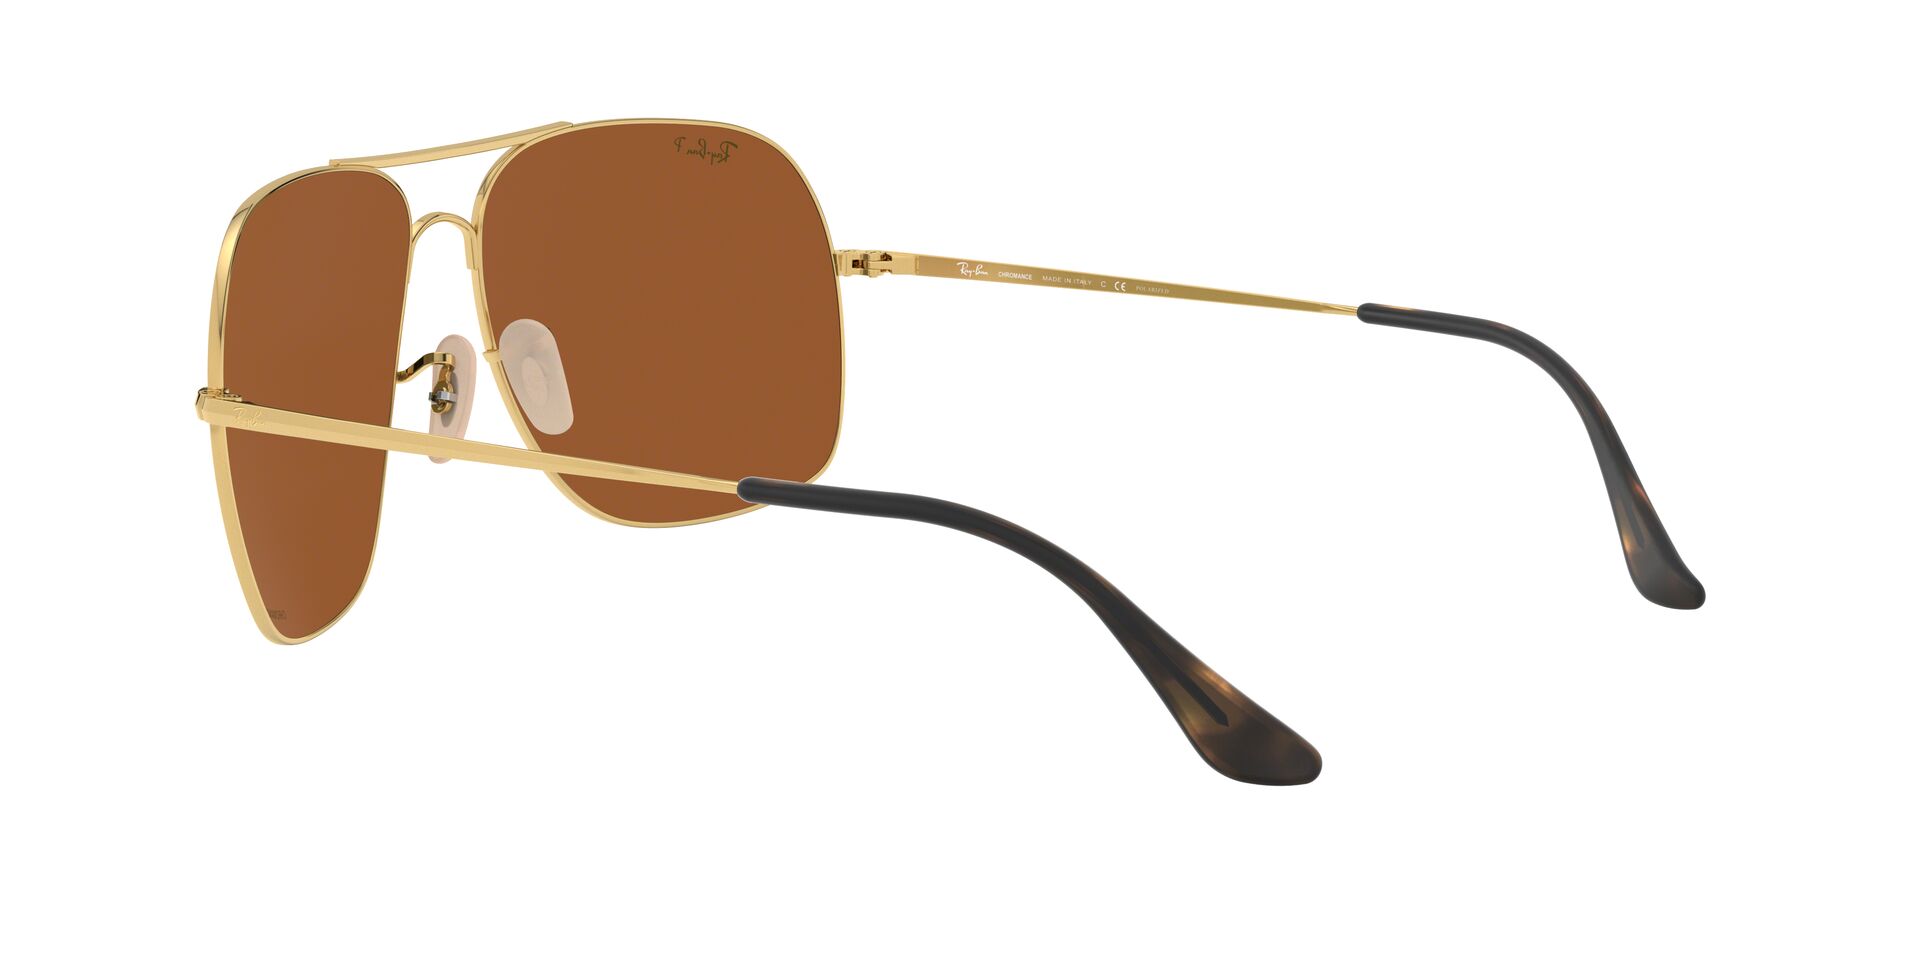 Buy Ray-Ban Rb3587 Chromance Sunglasses Online.